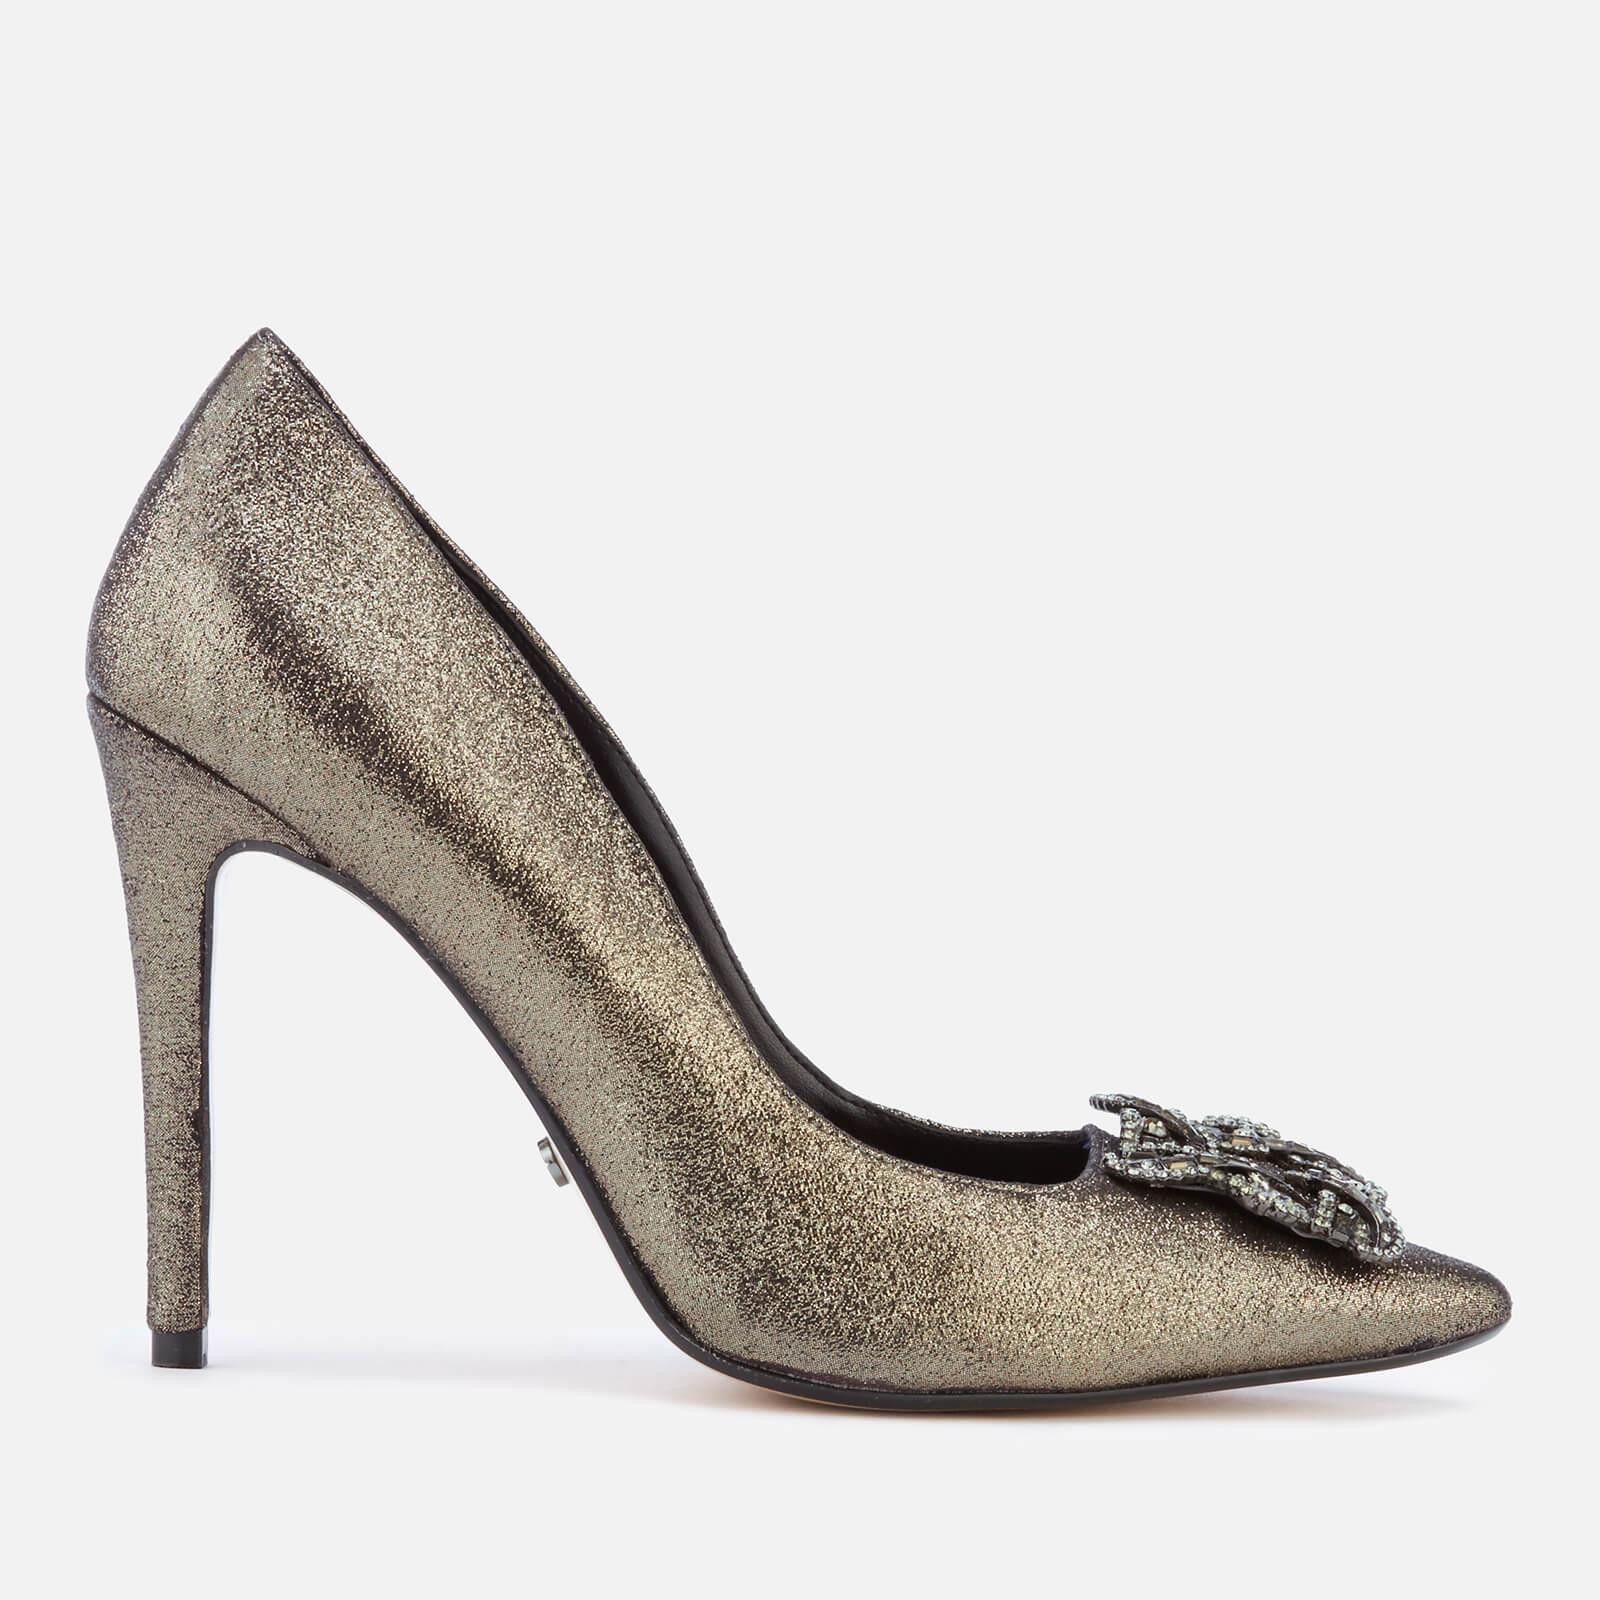  Dune  Women s Breanna Suede Court Shoes  in Metallic Lyst